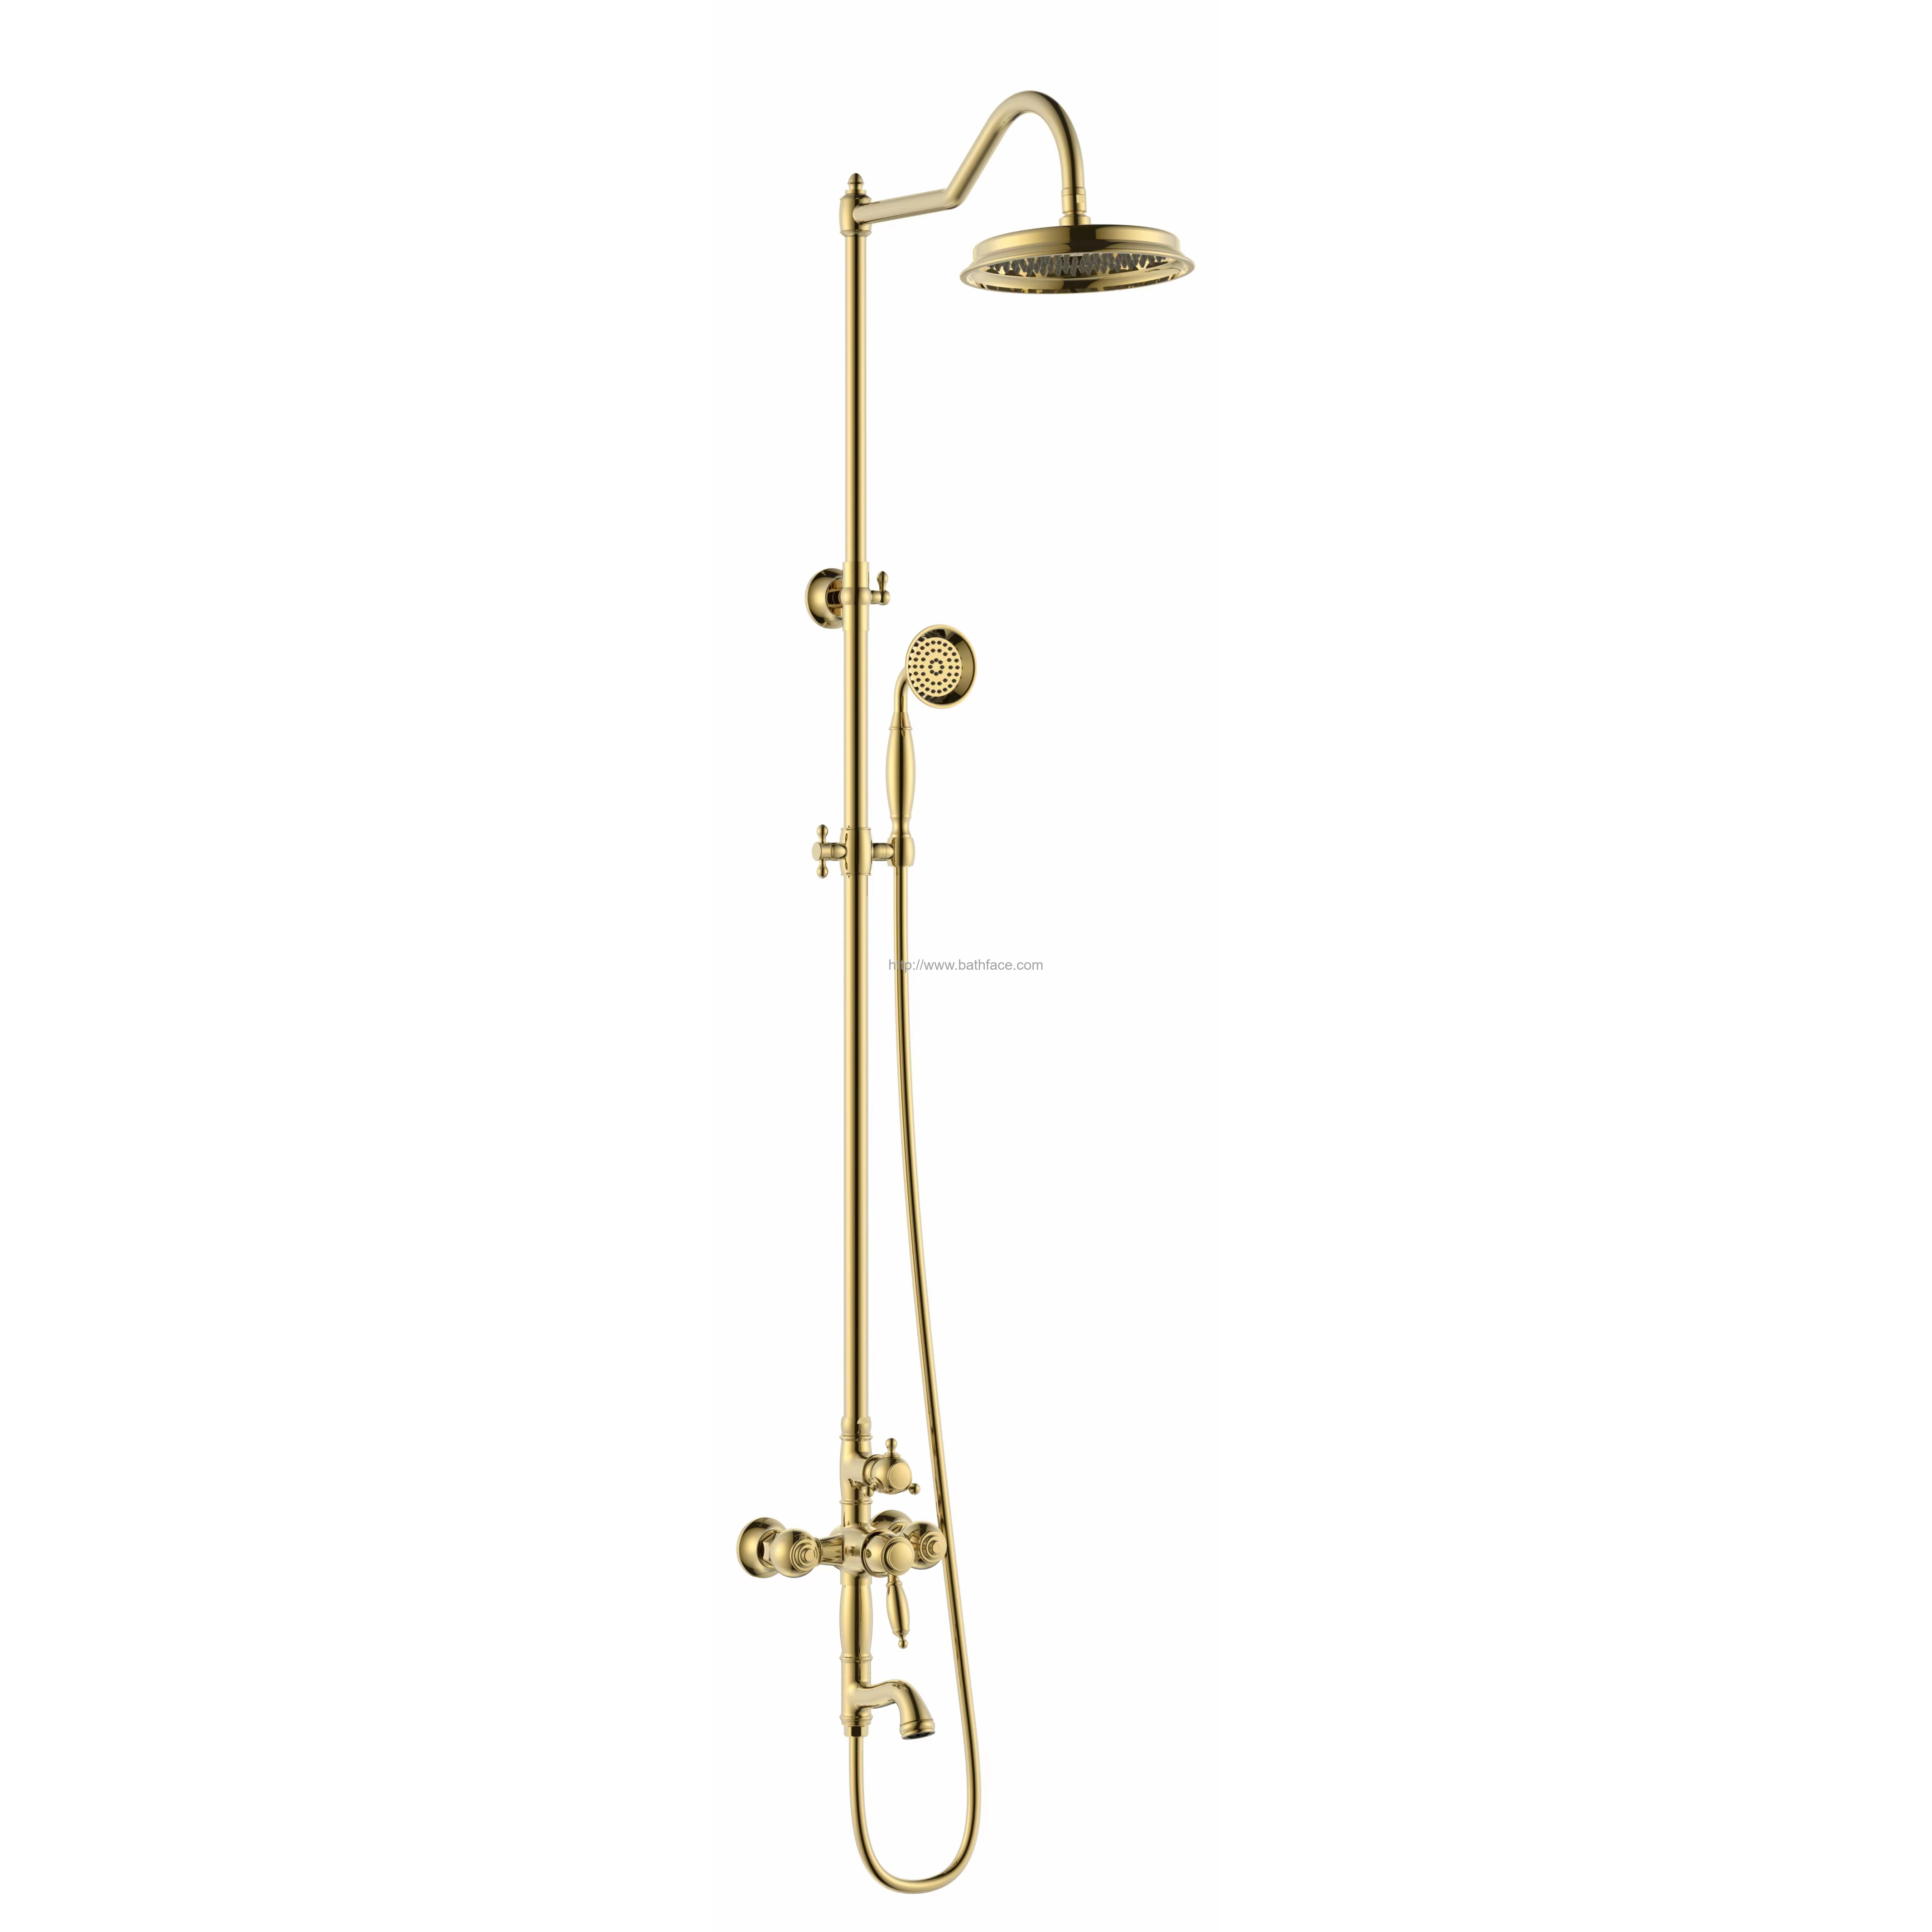 Gold Finish Shower Column Faucet